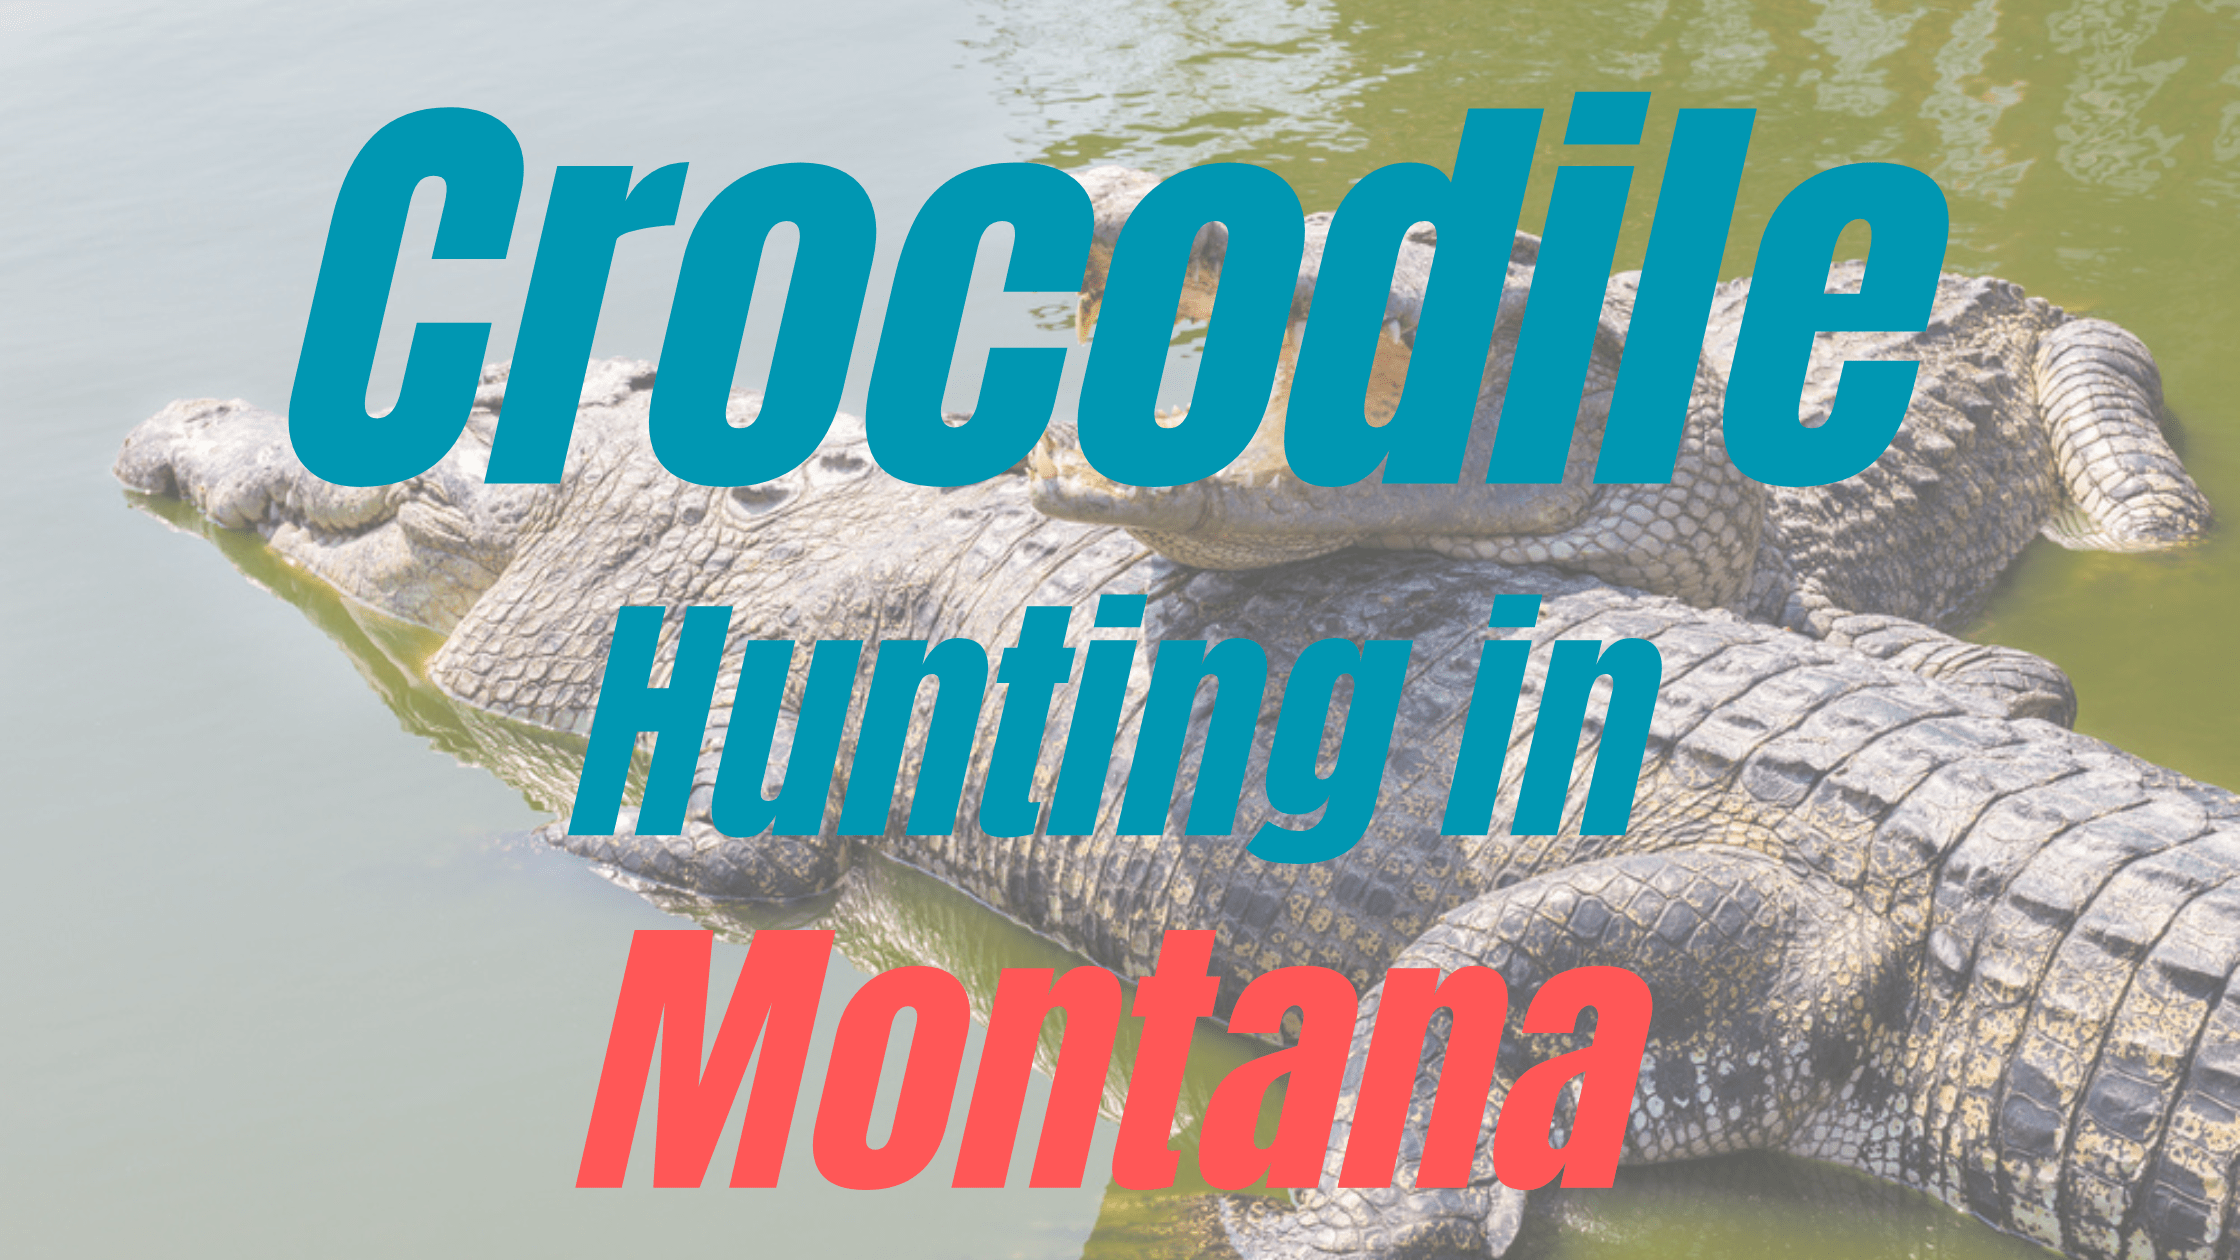 Crocodile Hunting in Montana